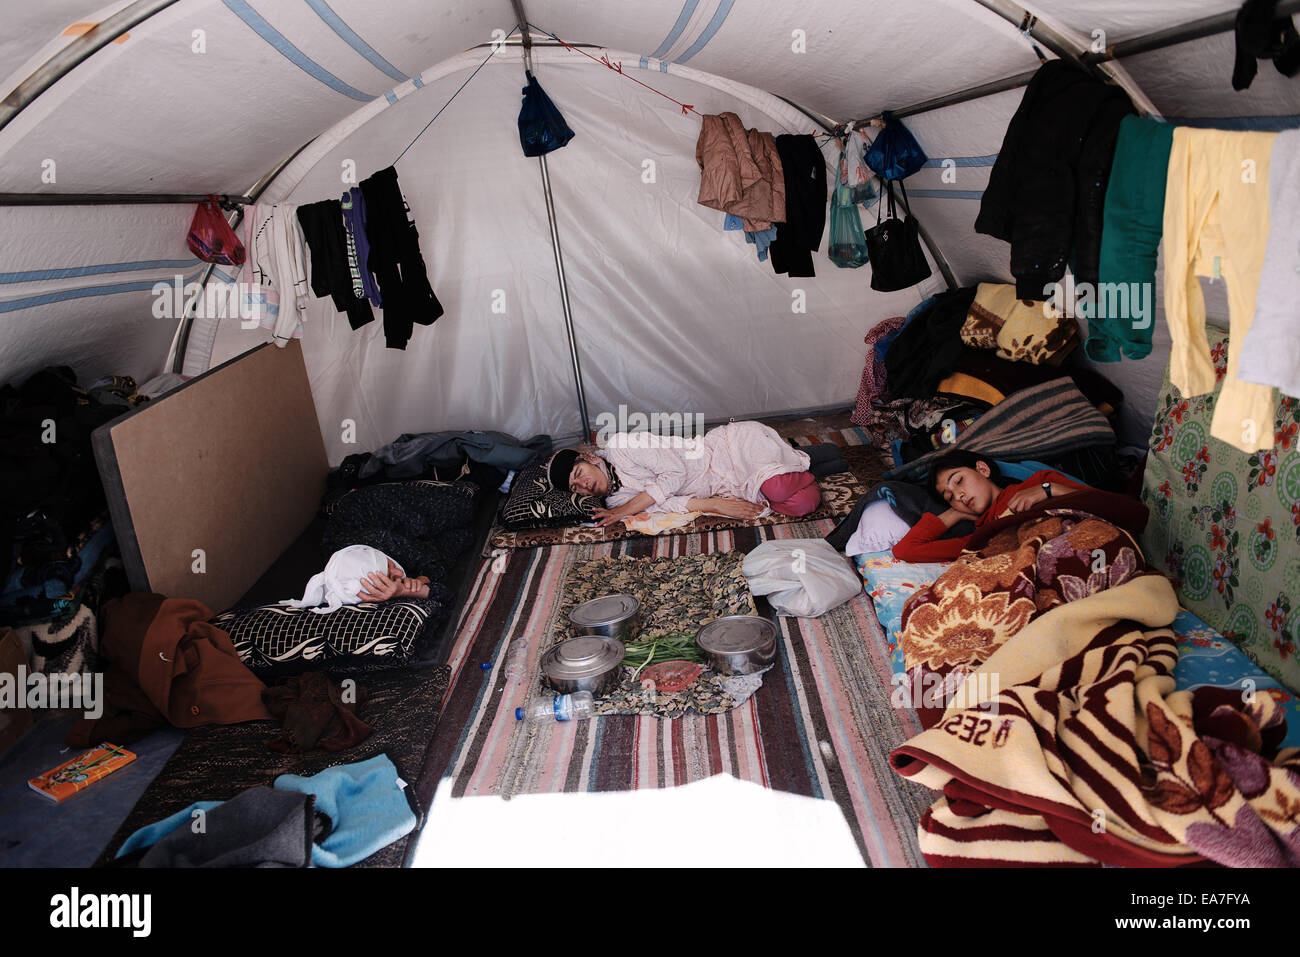 refugee camp tents